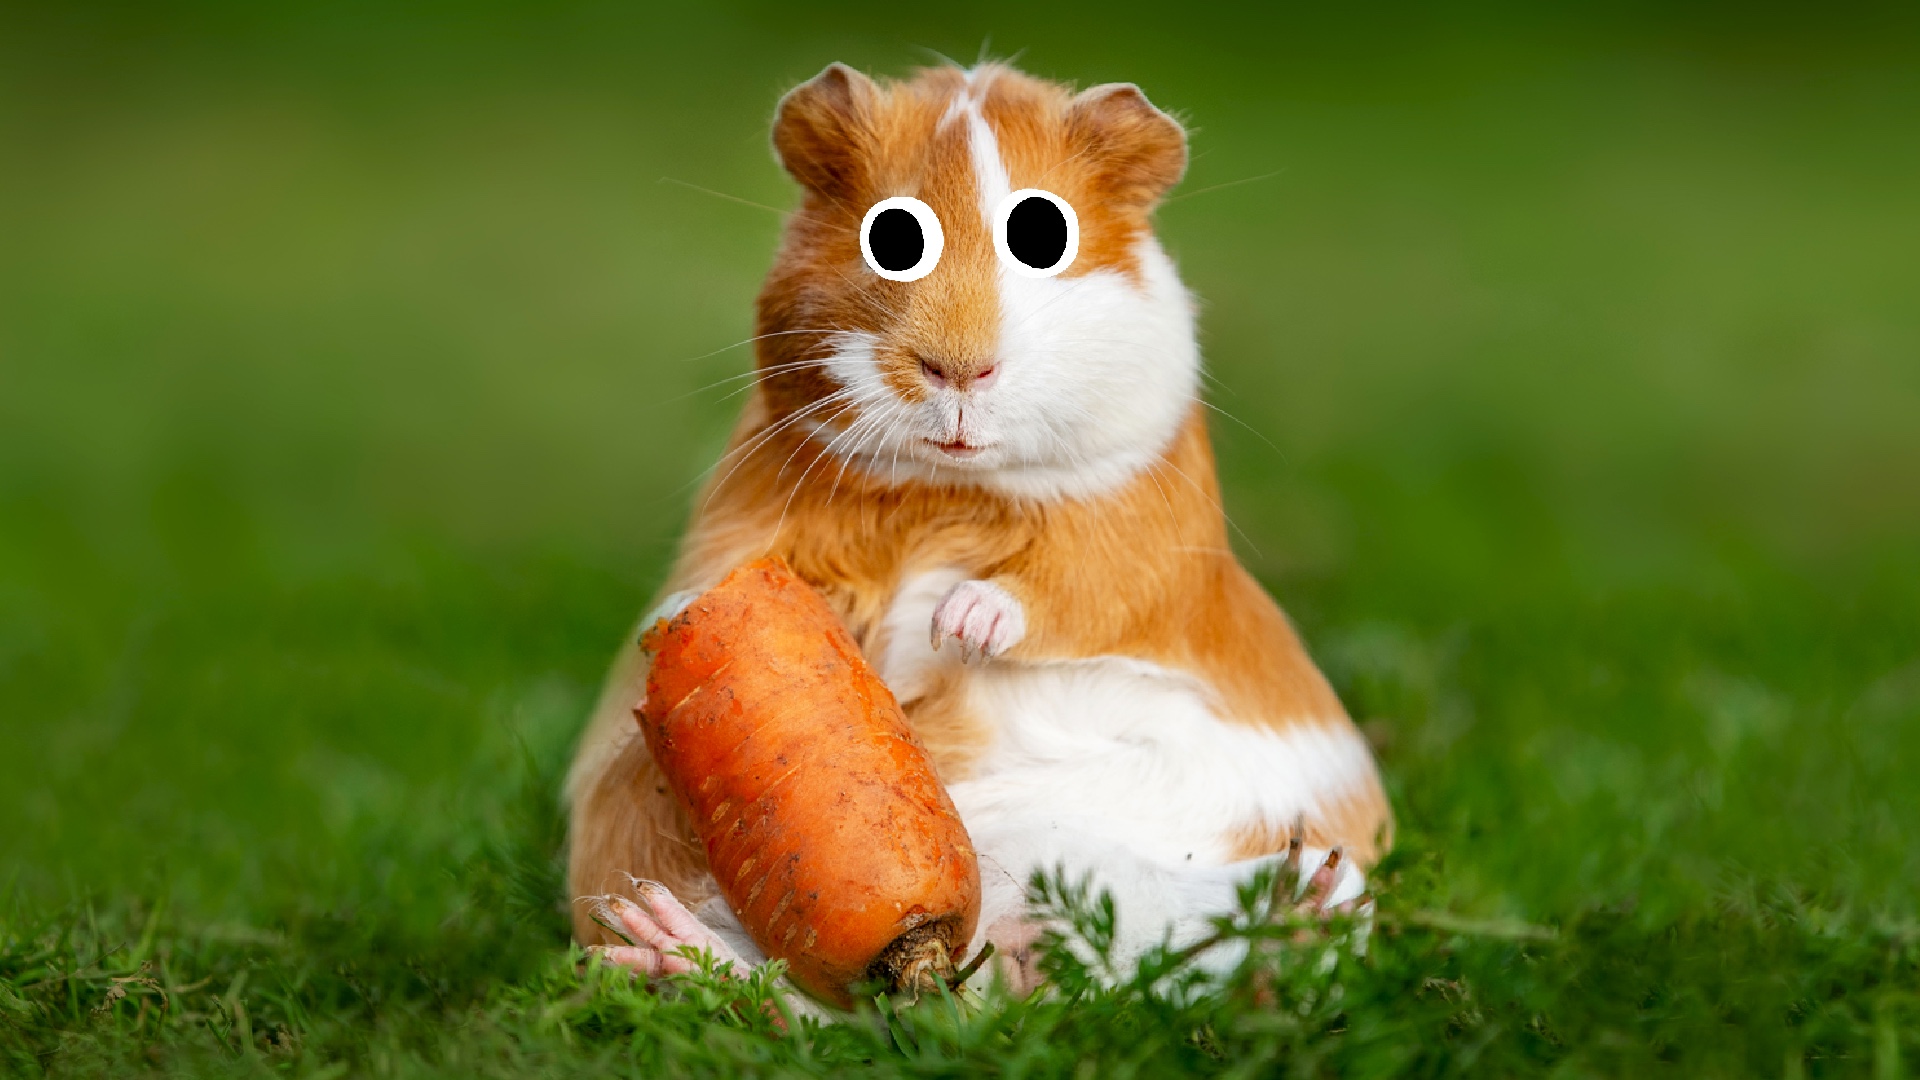 A guinea pig eating a carrot